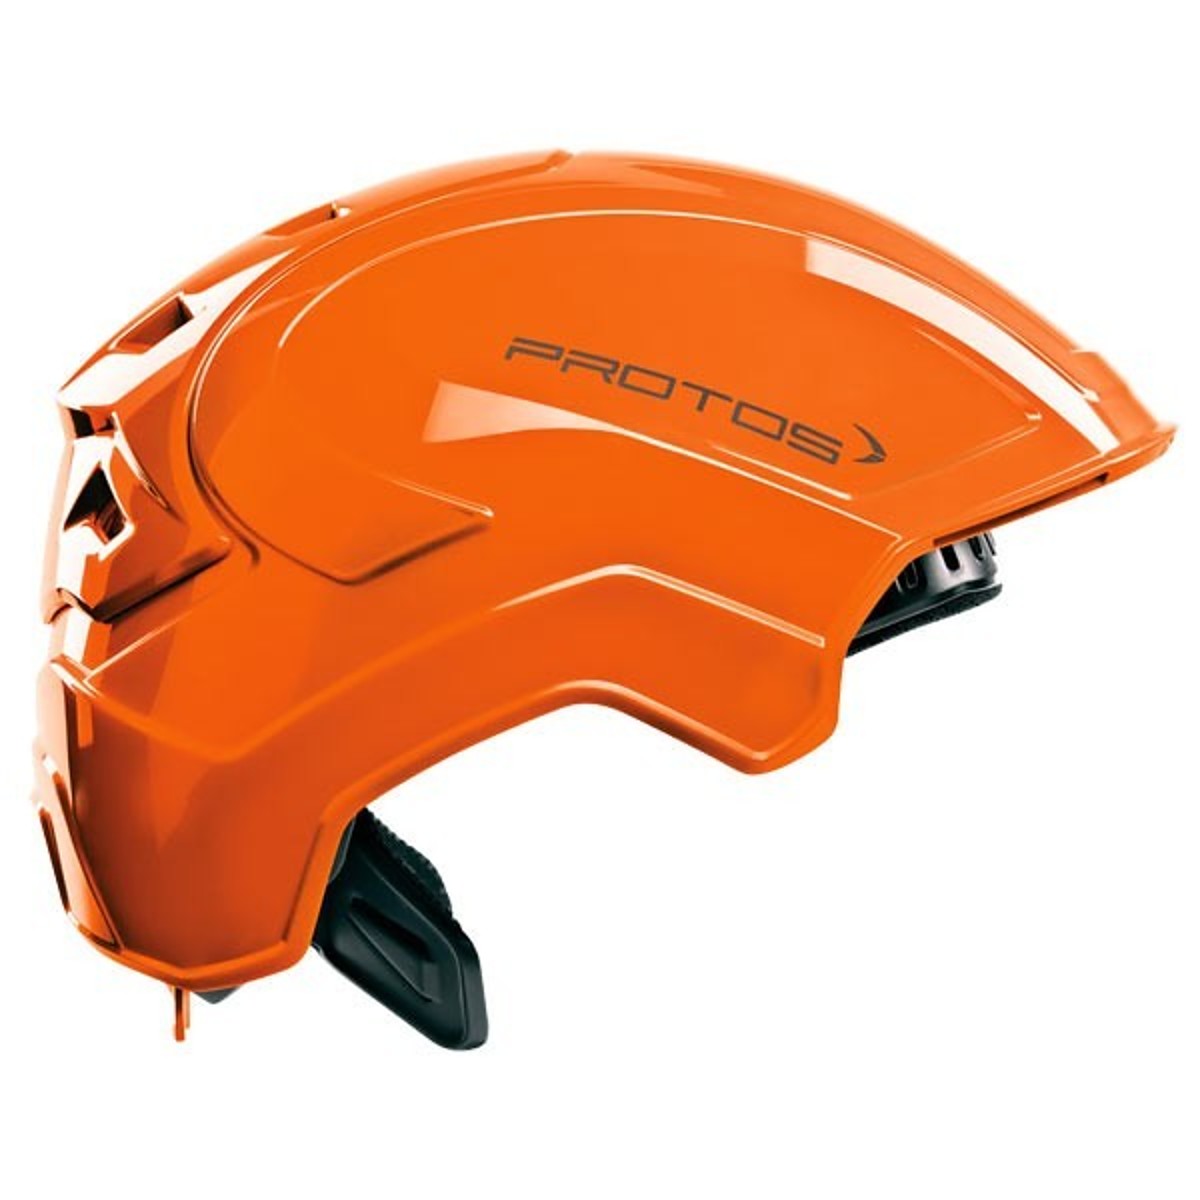 Protos Integral Industry safety helmet